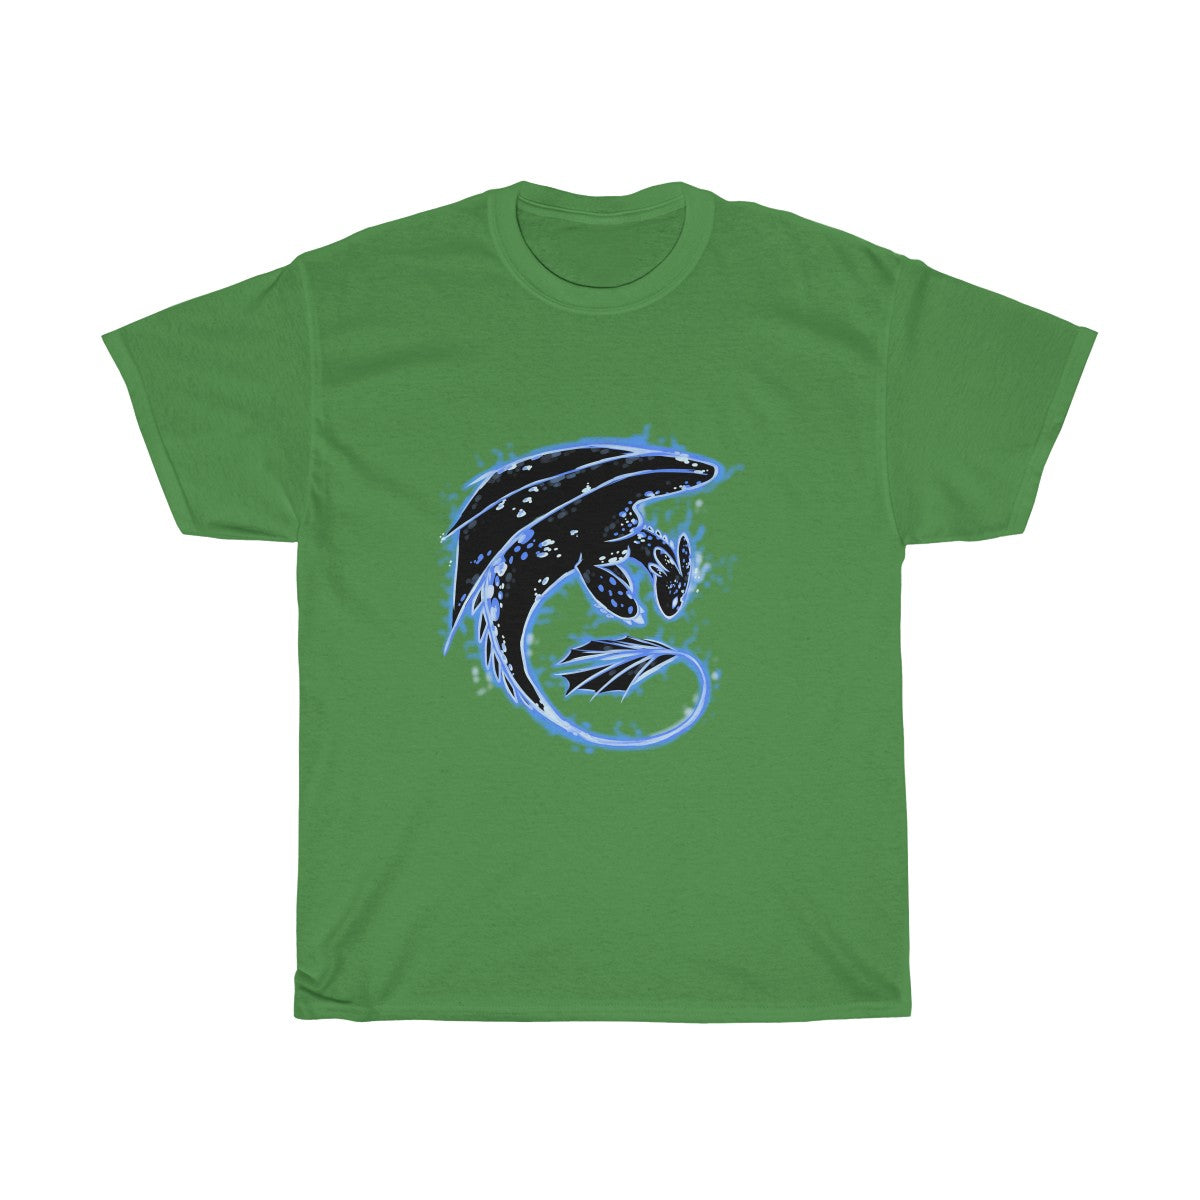 Blue Dragon - T-Shirt T-Shirt Dire Creatures Green S 